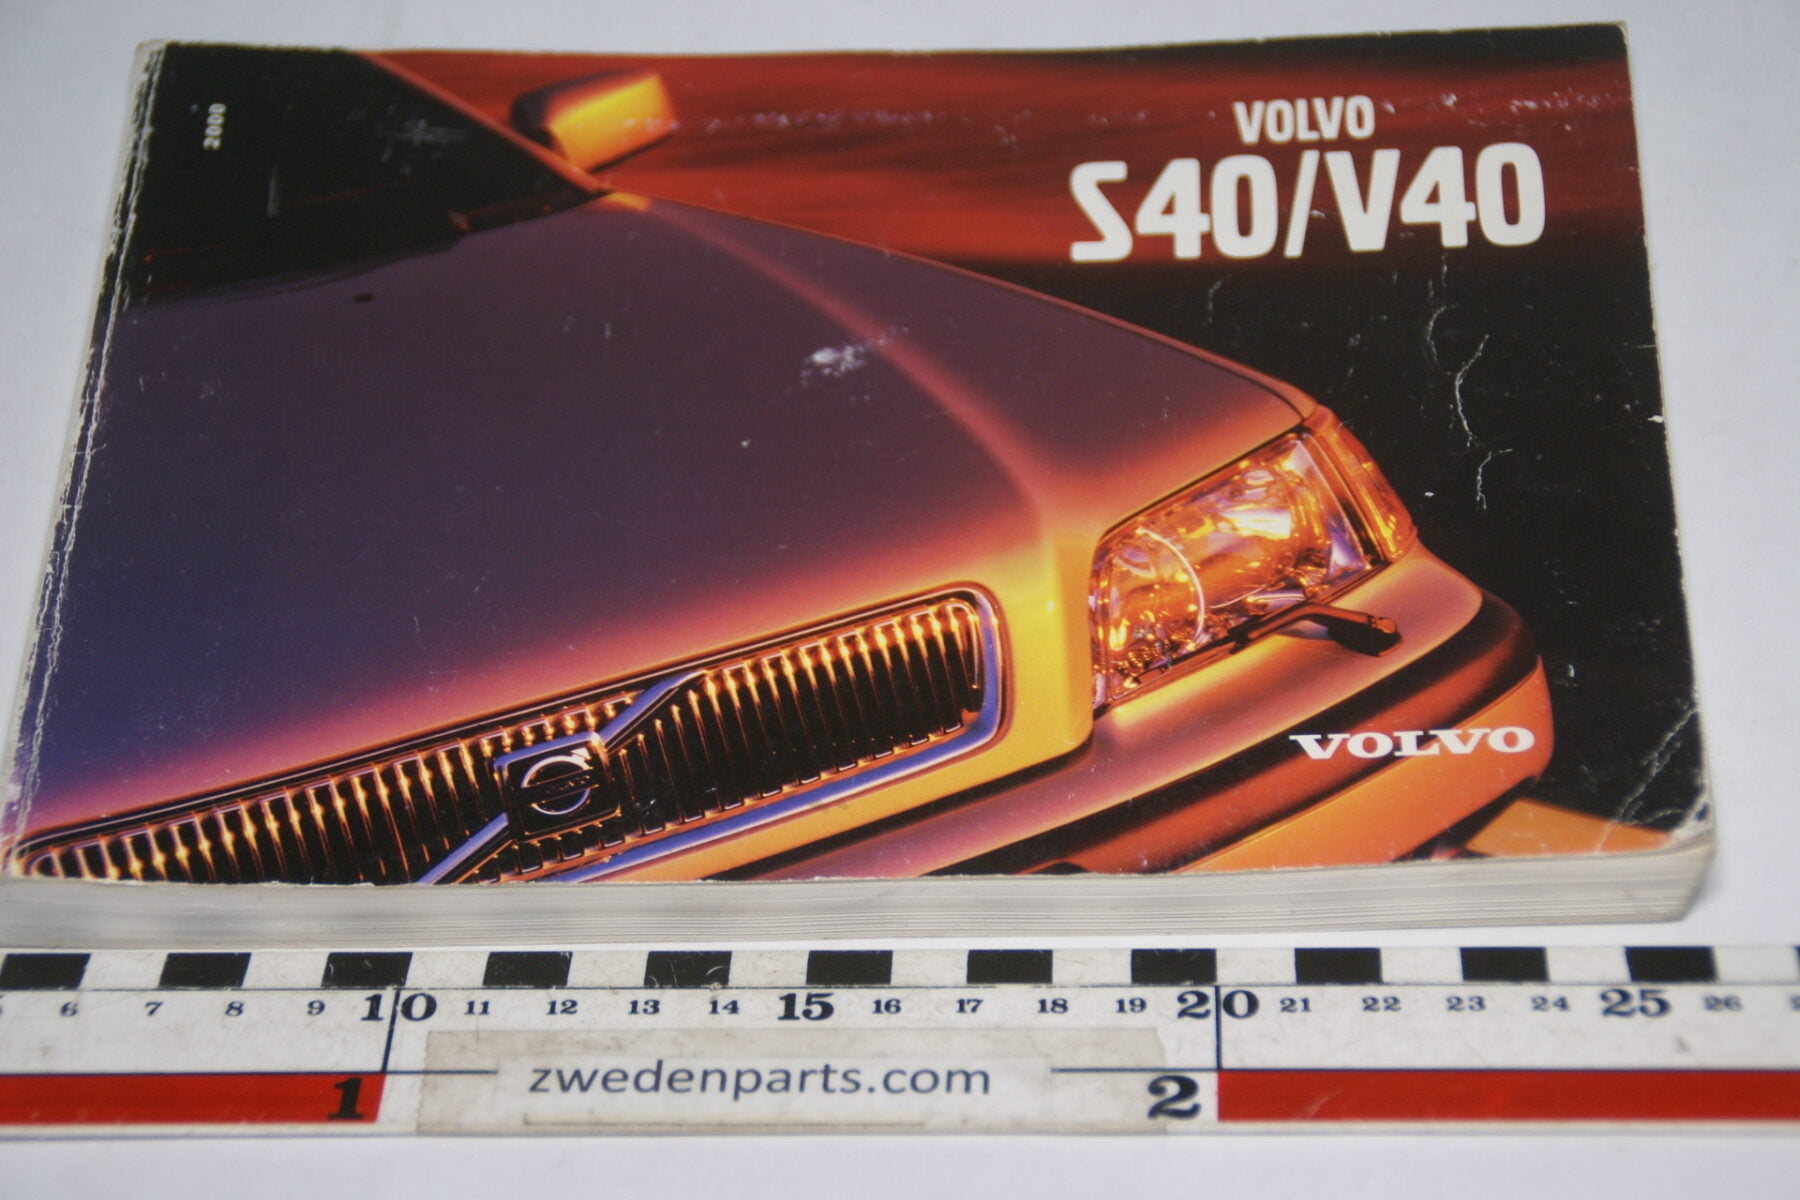 DSC07715 1999 originele instructieboekje Volvo S40 V40 nr TP 4535-1 Svensk-326622d6